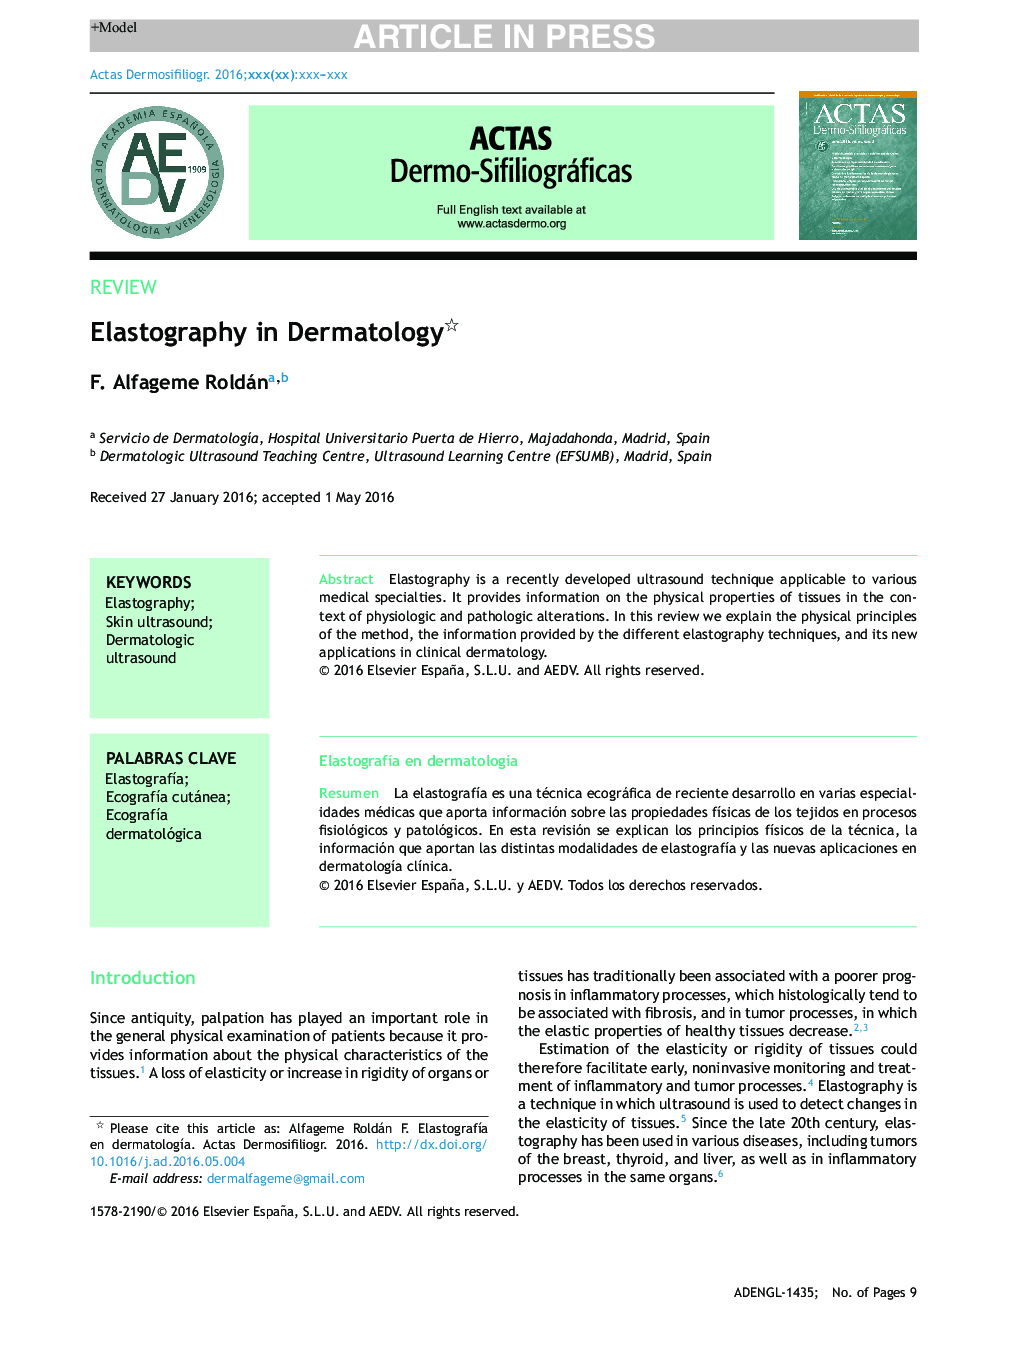 Elastography in Dermatology